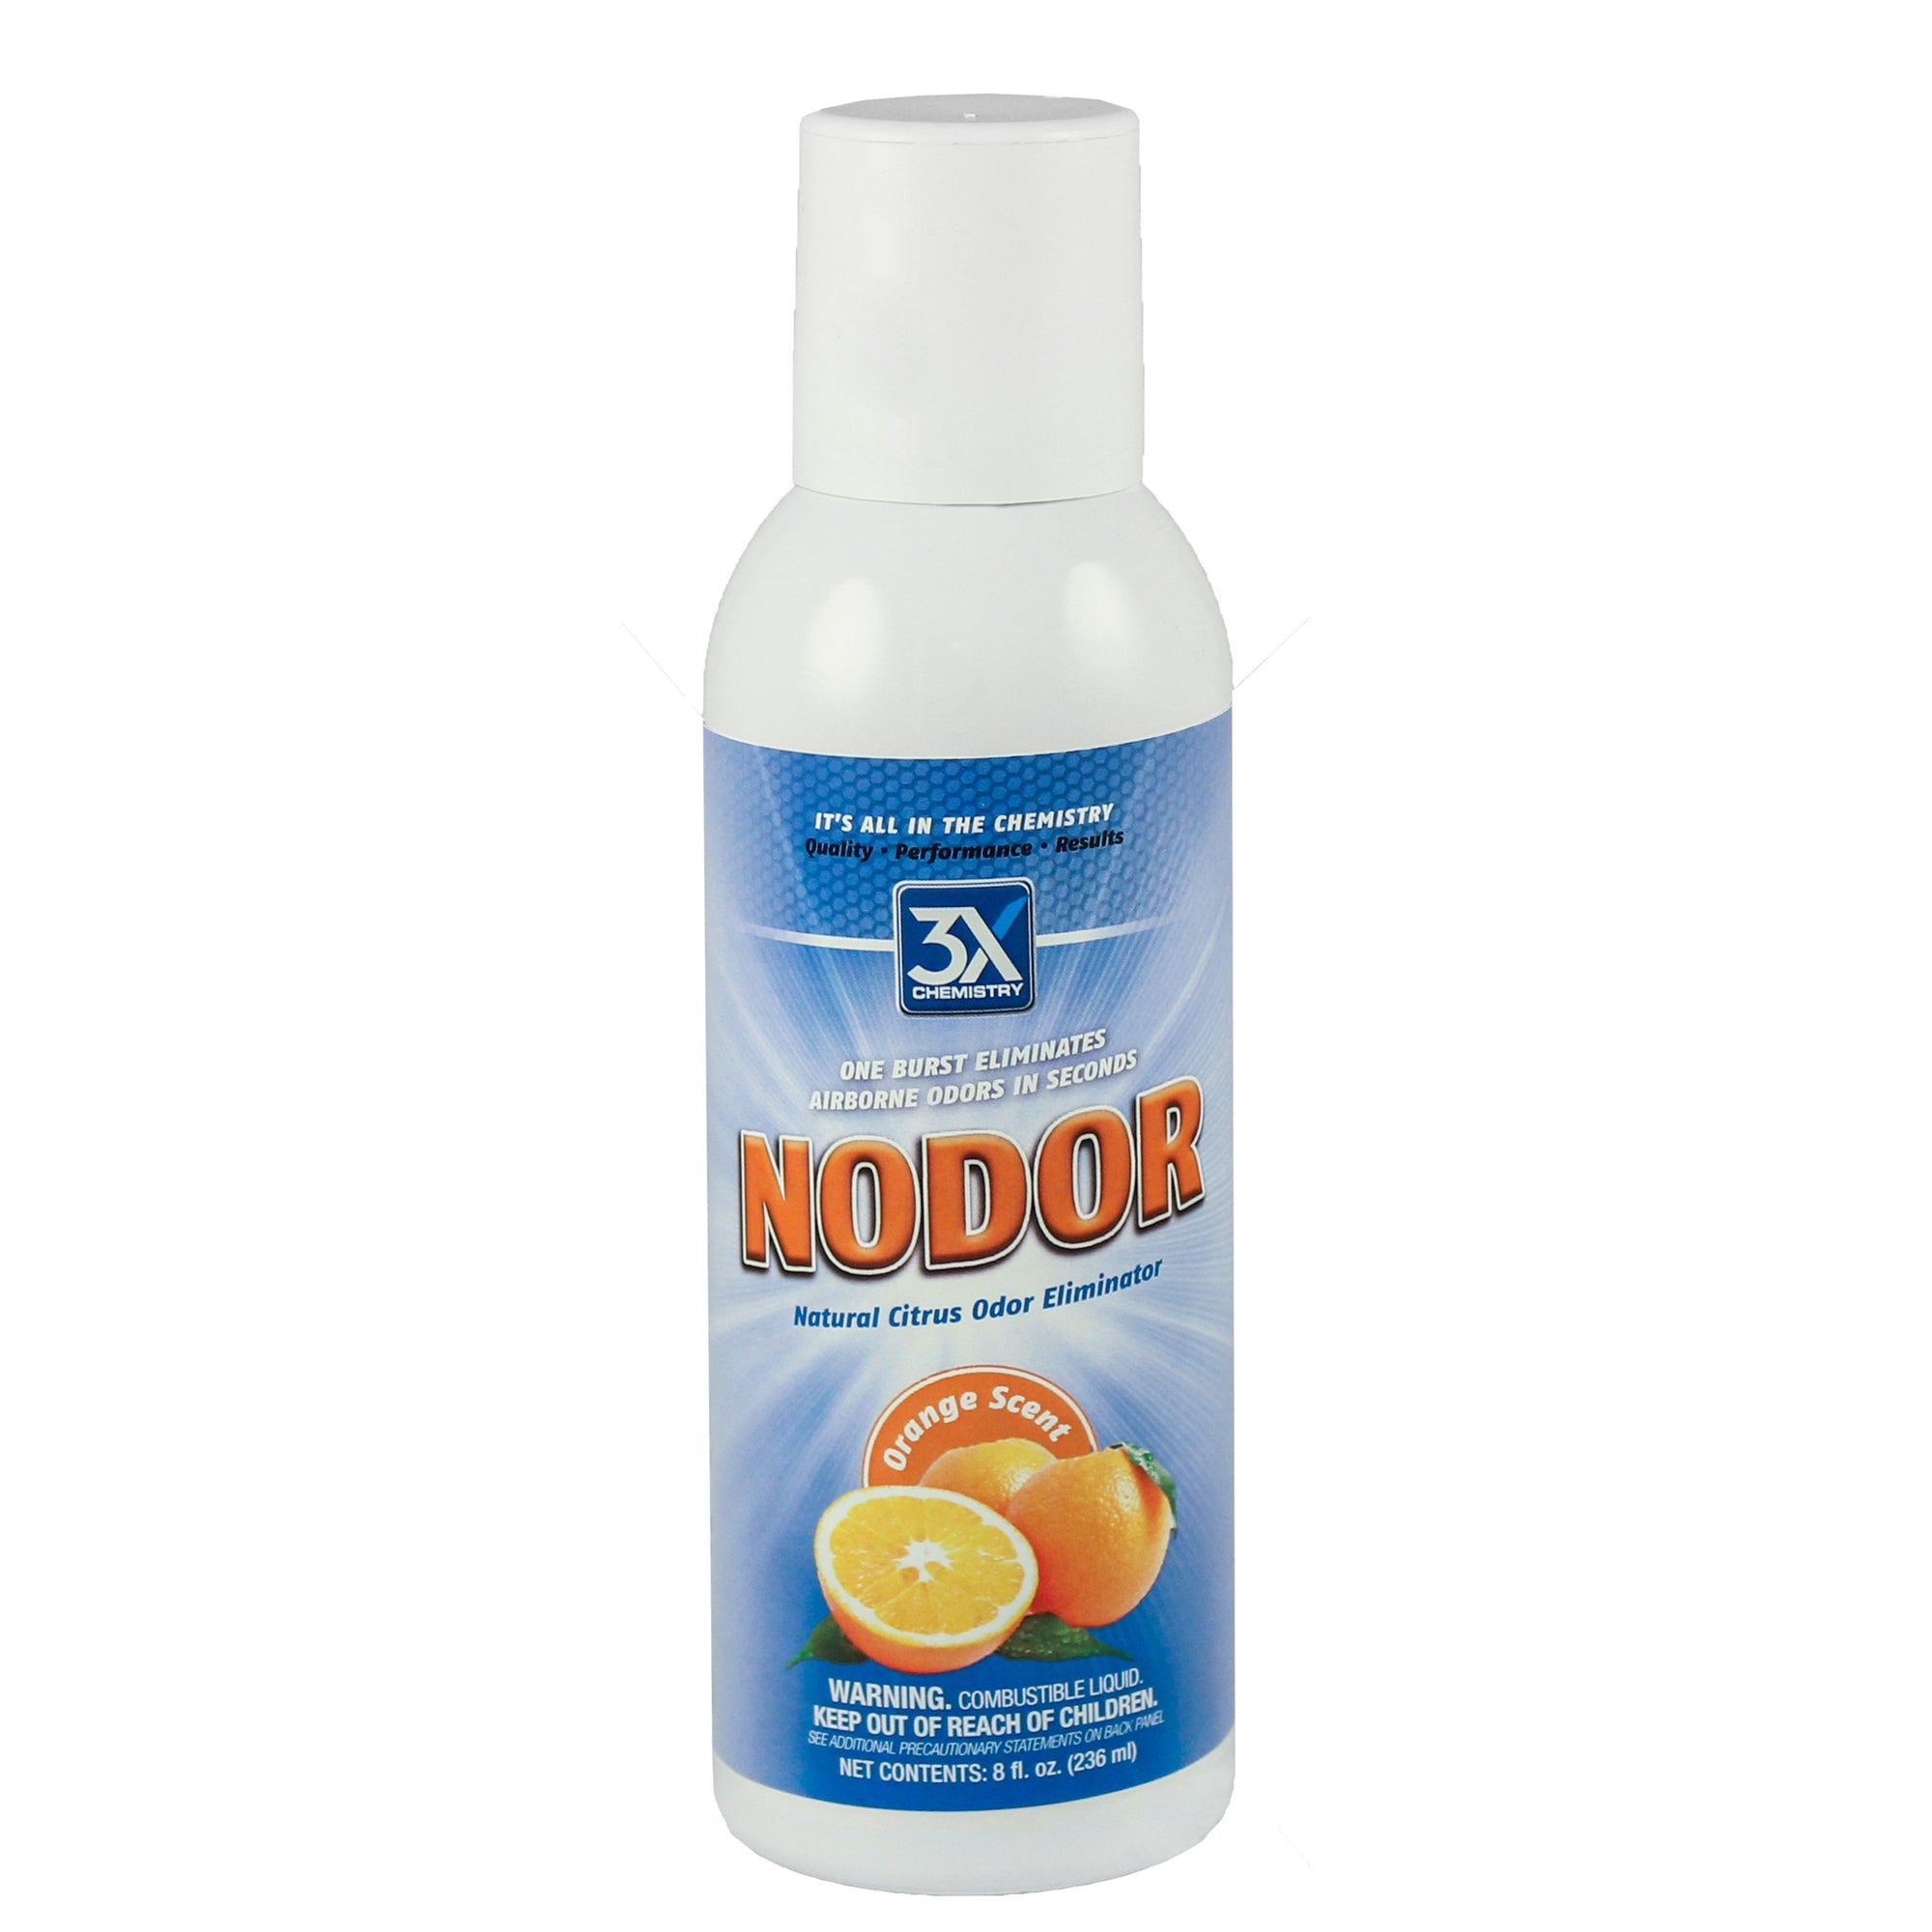 3X Chemistry 138 NODOR Odor Eliminator - Orange Scent